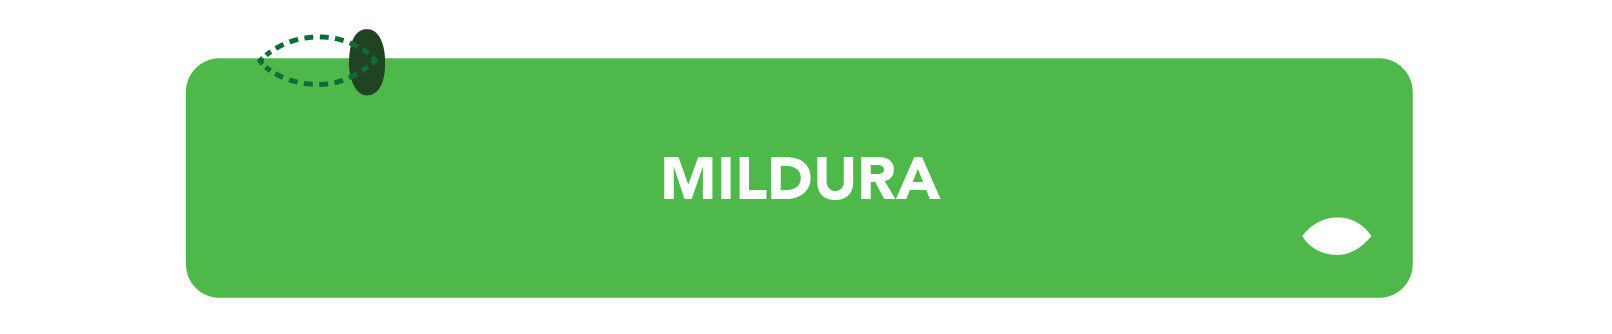 Mildura advance turf icon